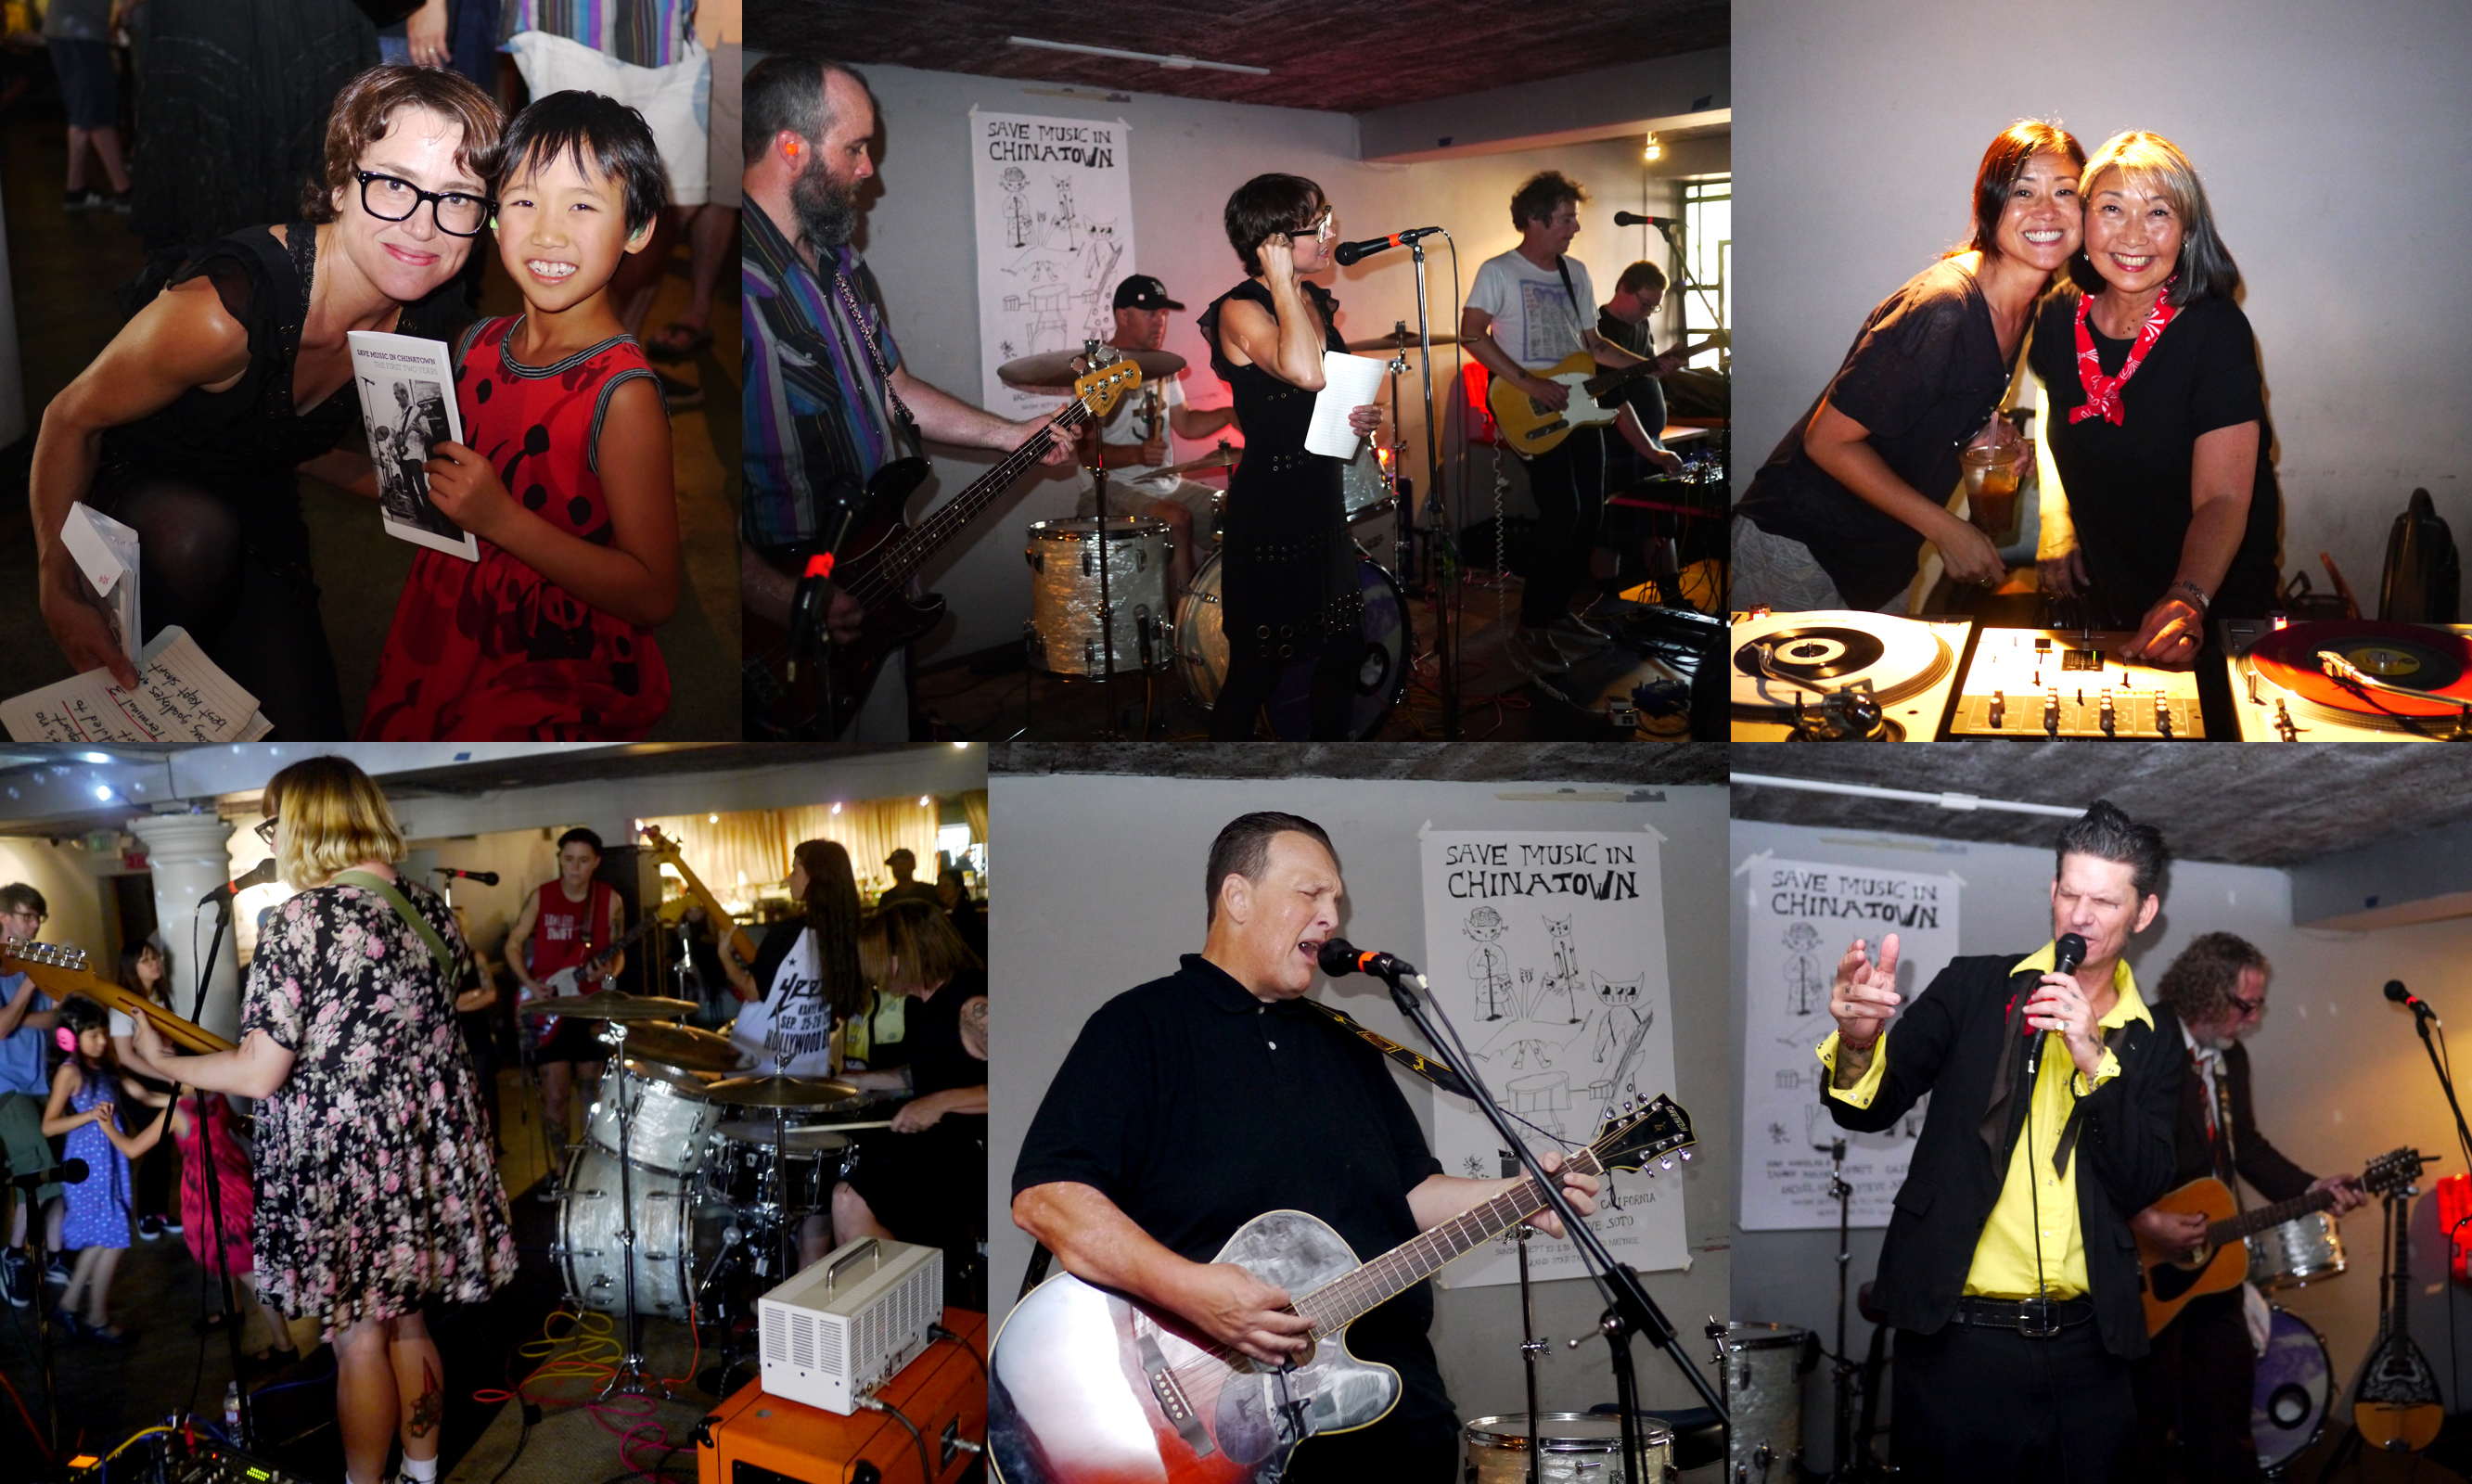 Save Music in Chinatown 7 recap with Rachel Haden, California, Upset ...